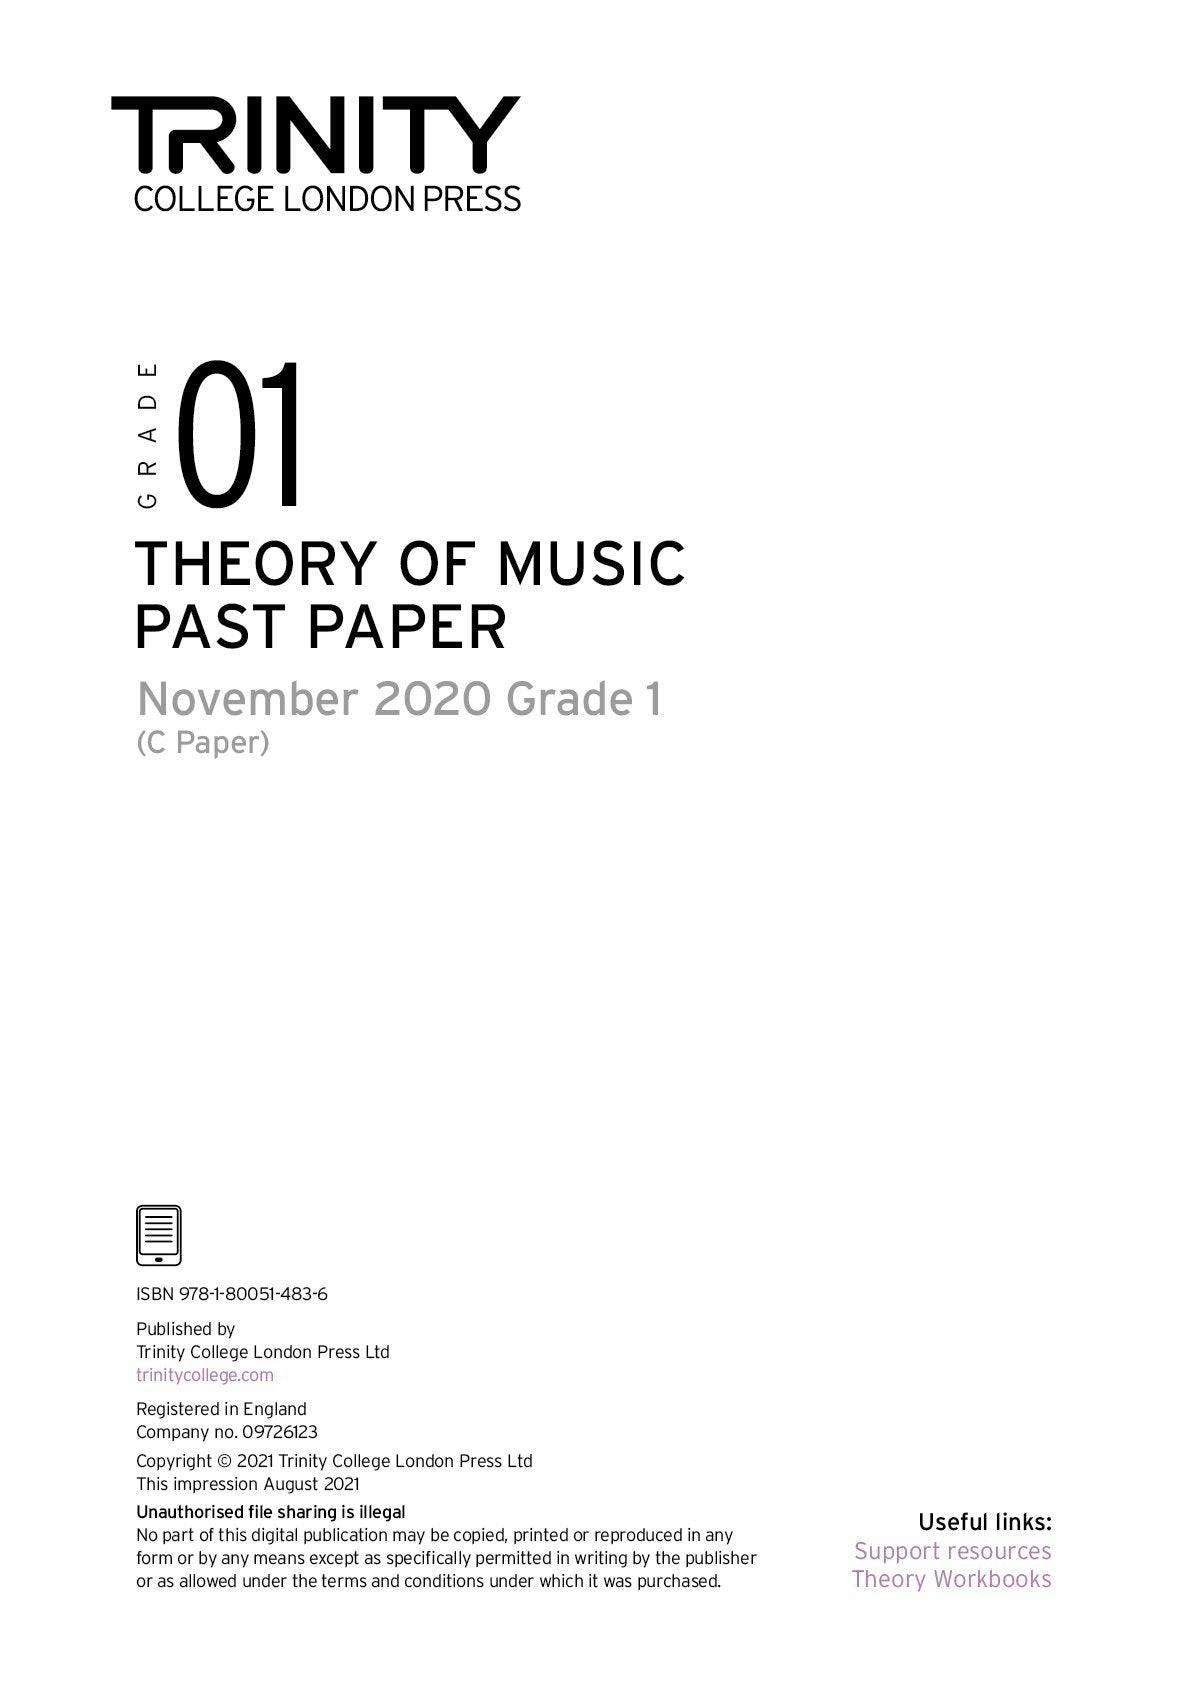 Theory of Music Past Paper 2020 Nov C: Grade 1 - ebook